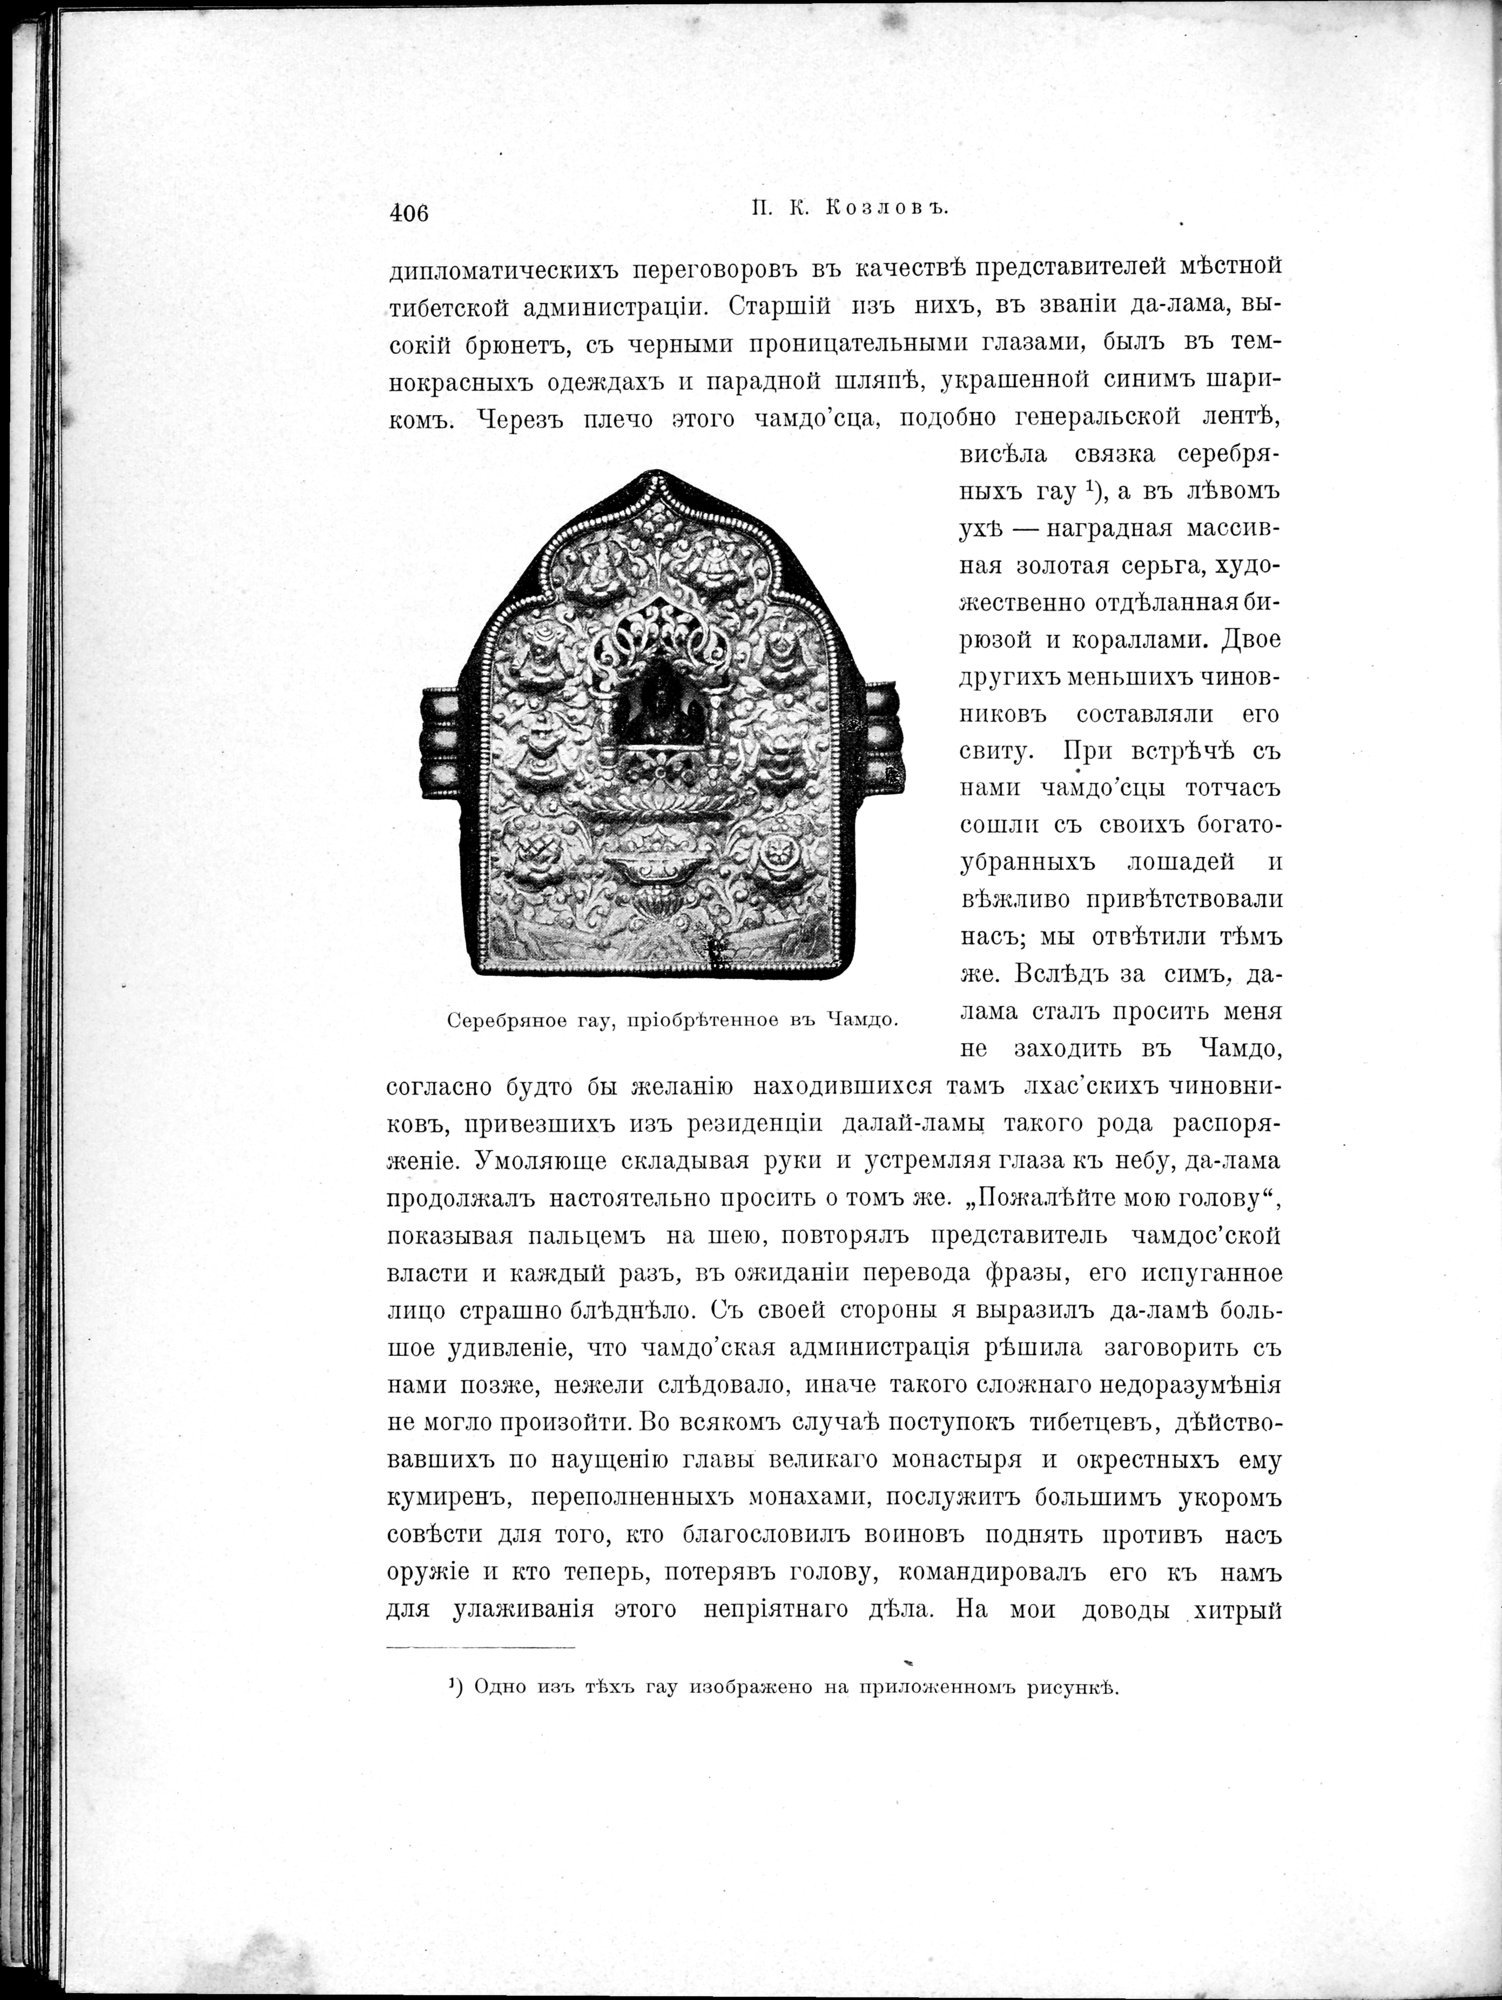 Mongoliia i Kam : vol.2 / Page 202 (Grayscale High Resolution Image)